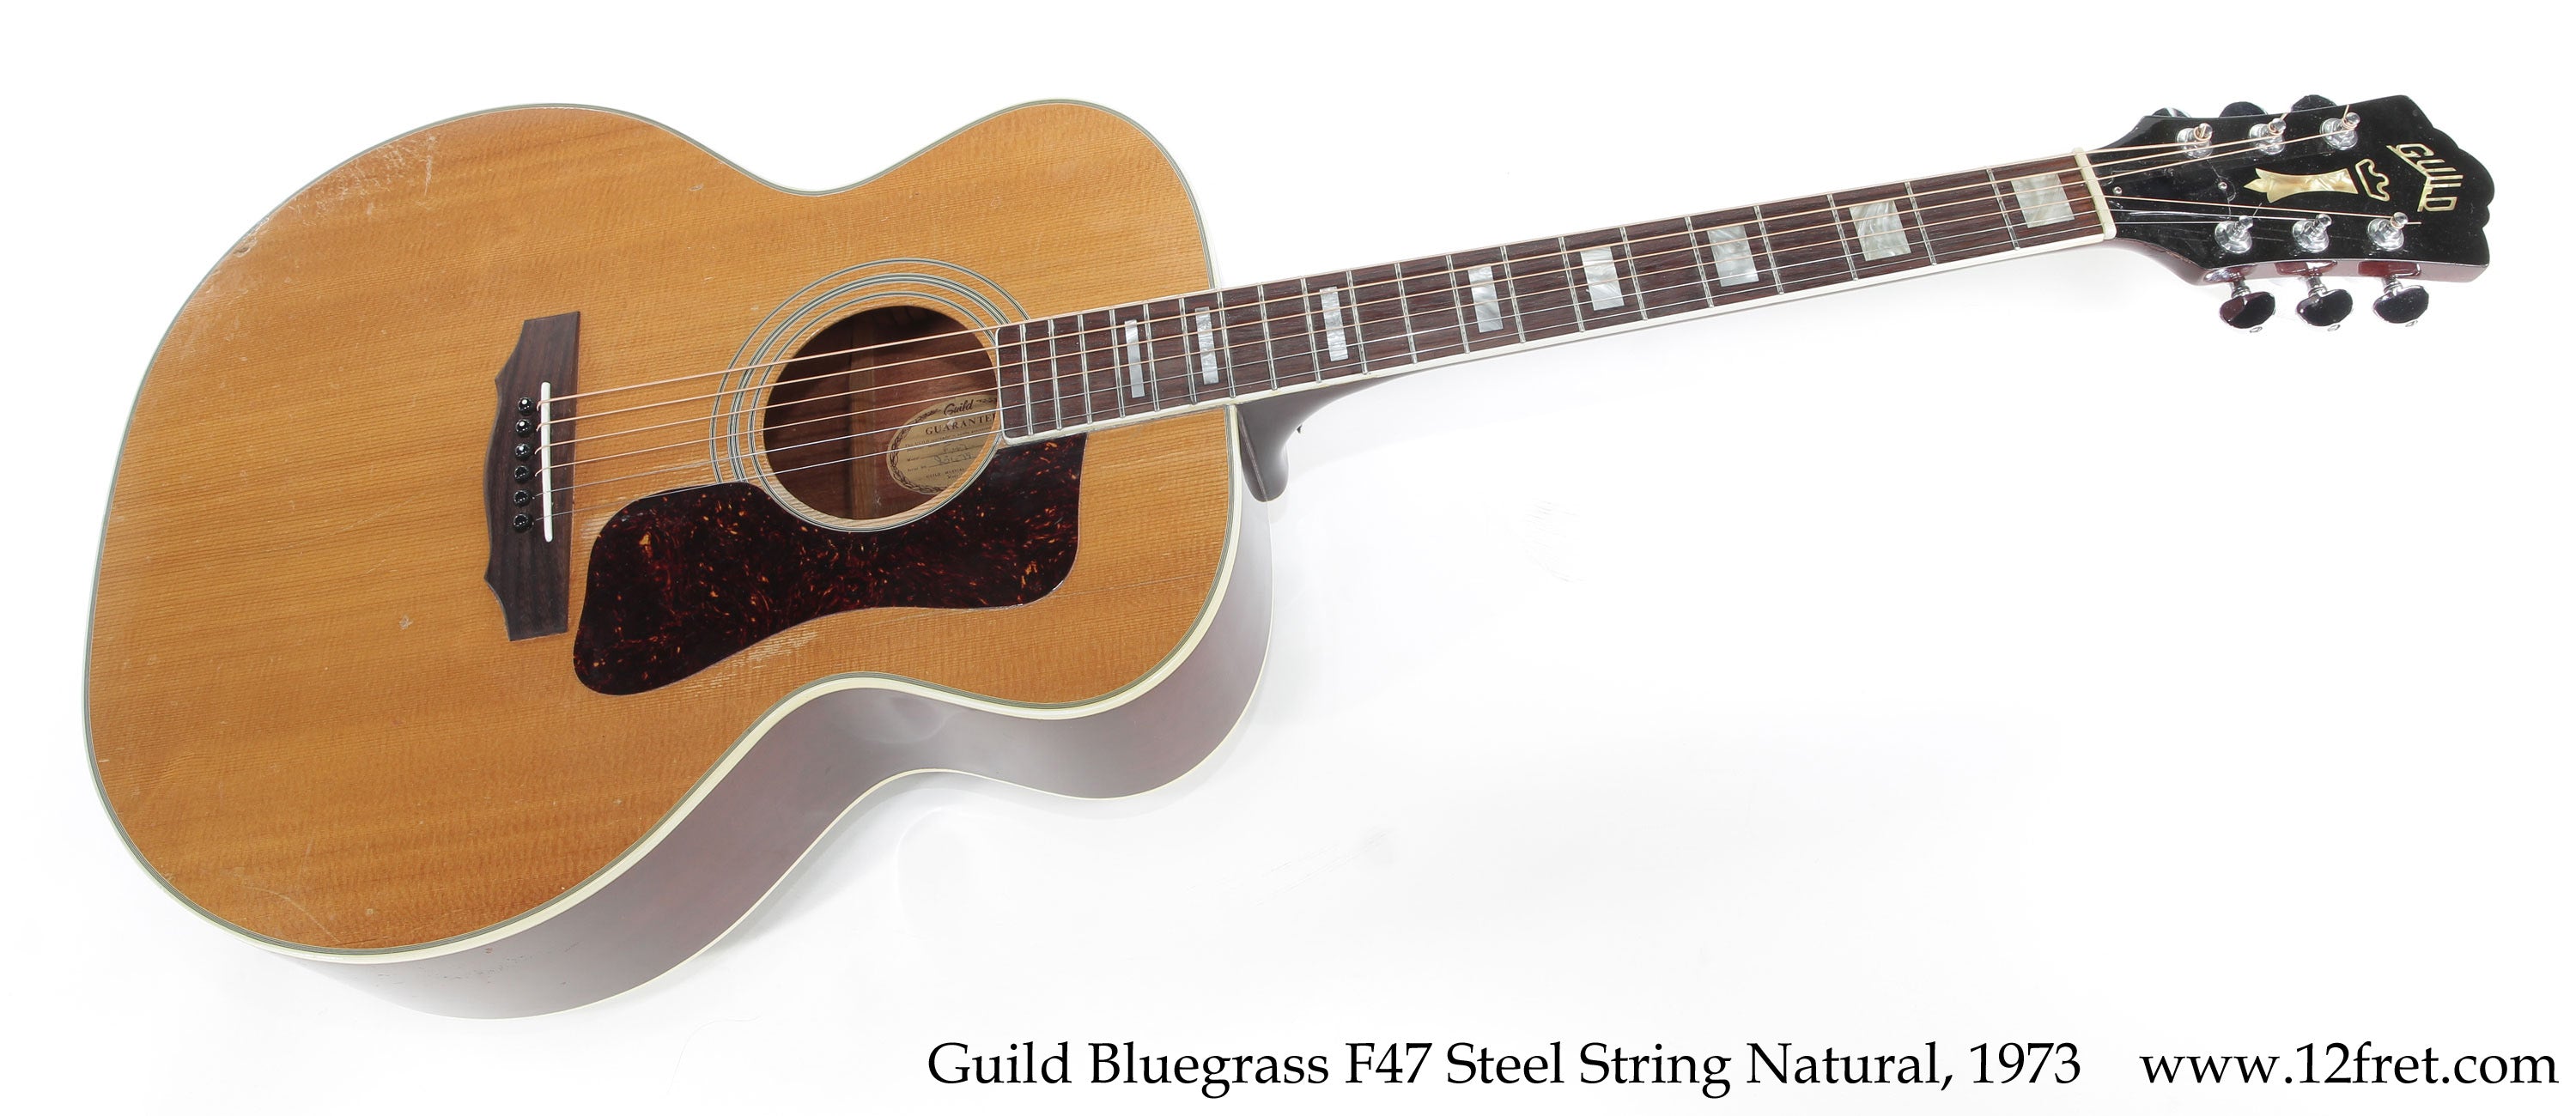 Guild Bluegrass F47 Steel String Acoustic Natural, 1973 - The Twelfth Fret